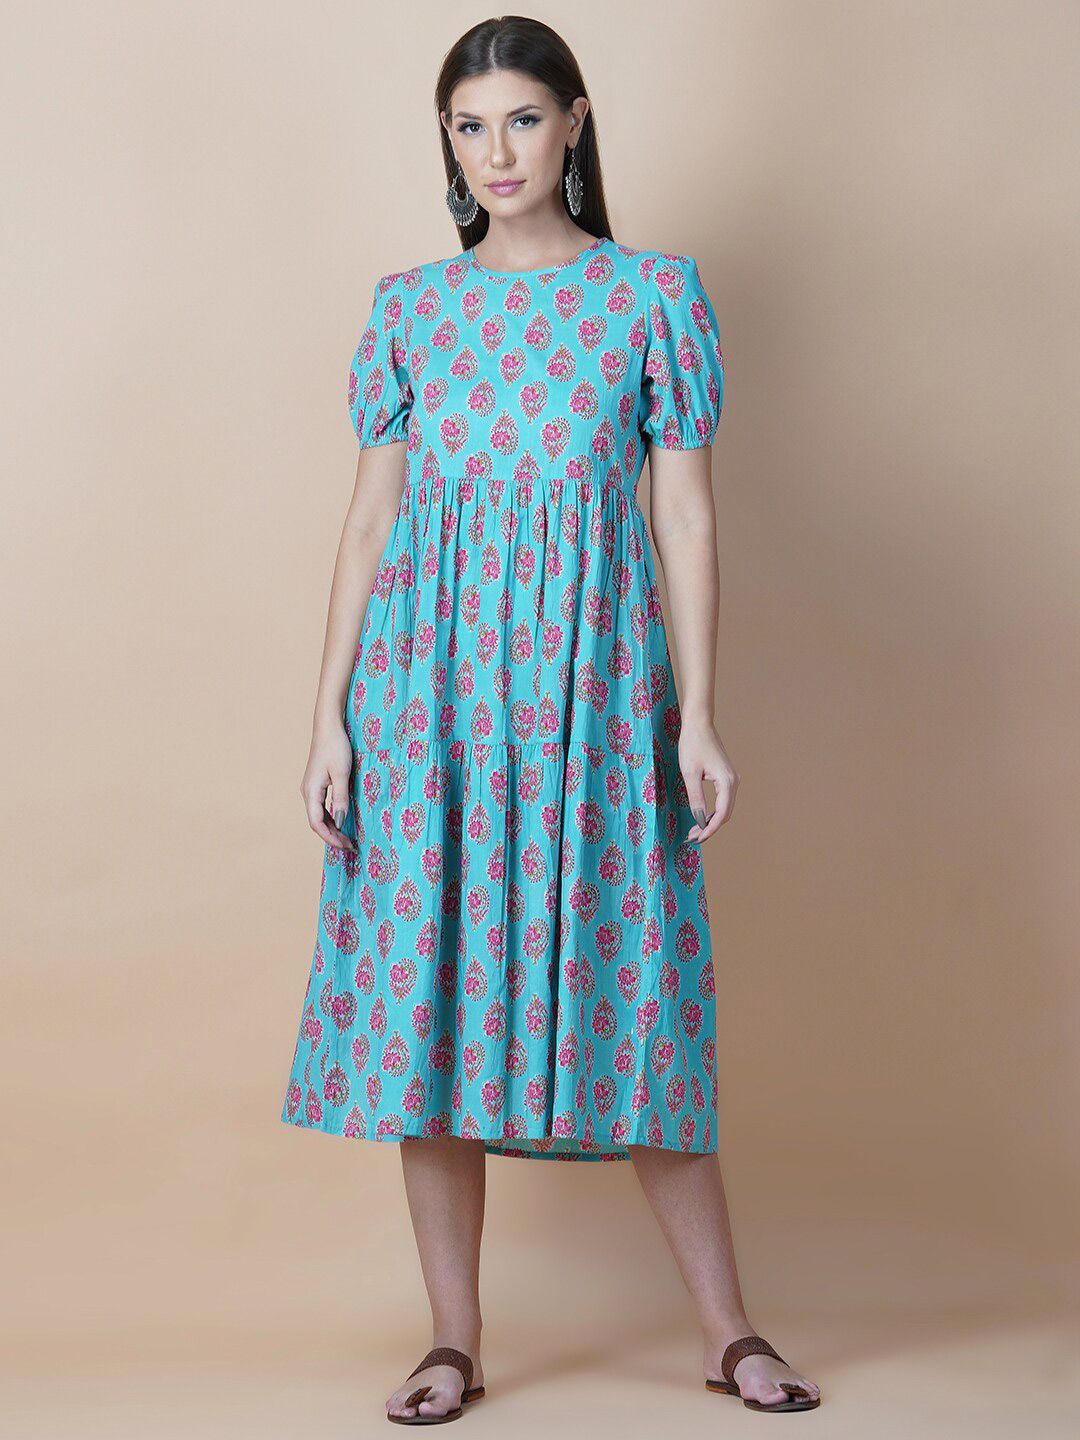 Twilldor Blue Cotton Floral Ethnic A-Line Midi Dress Price in India